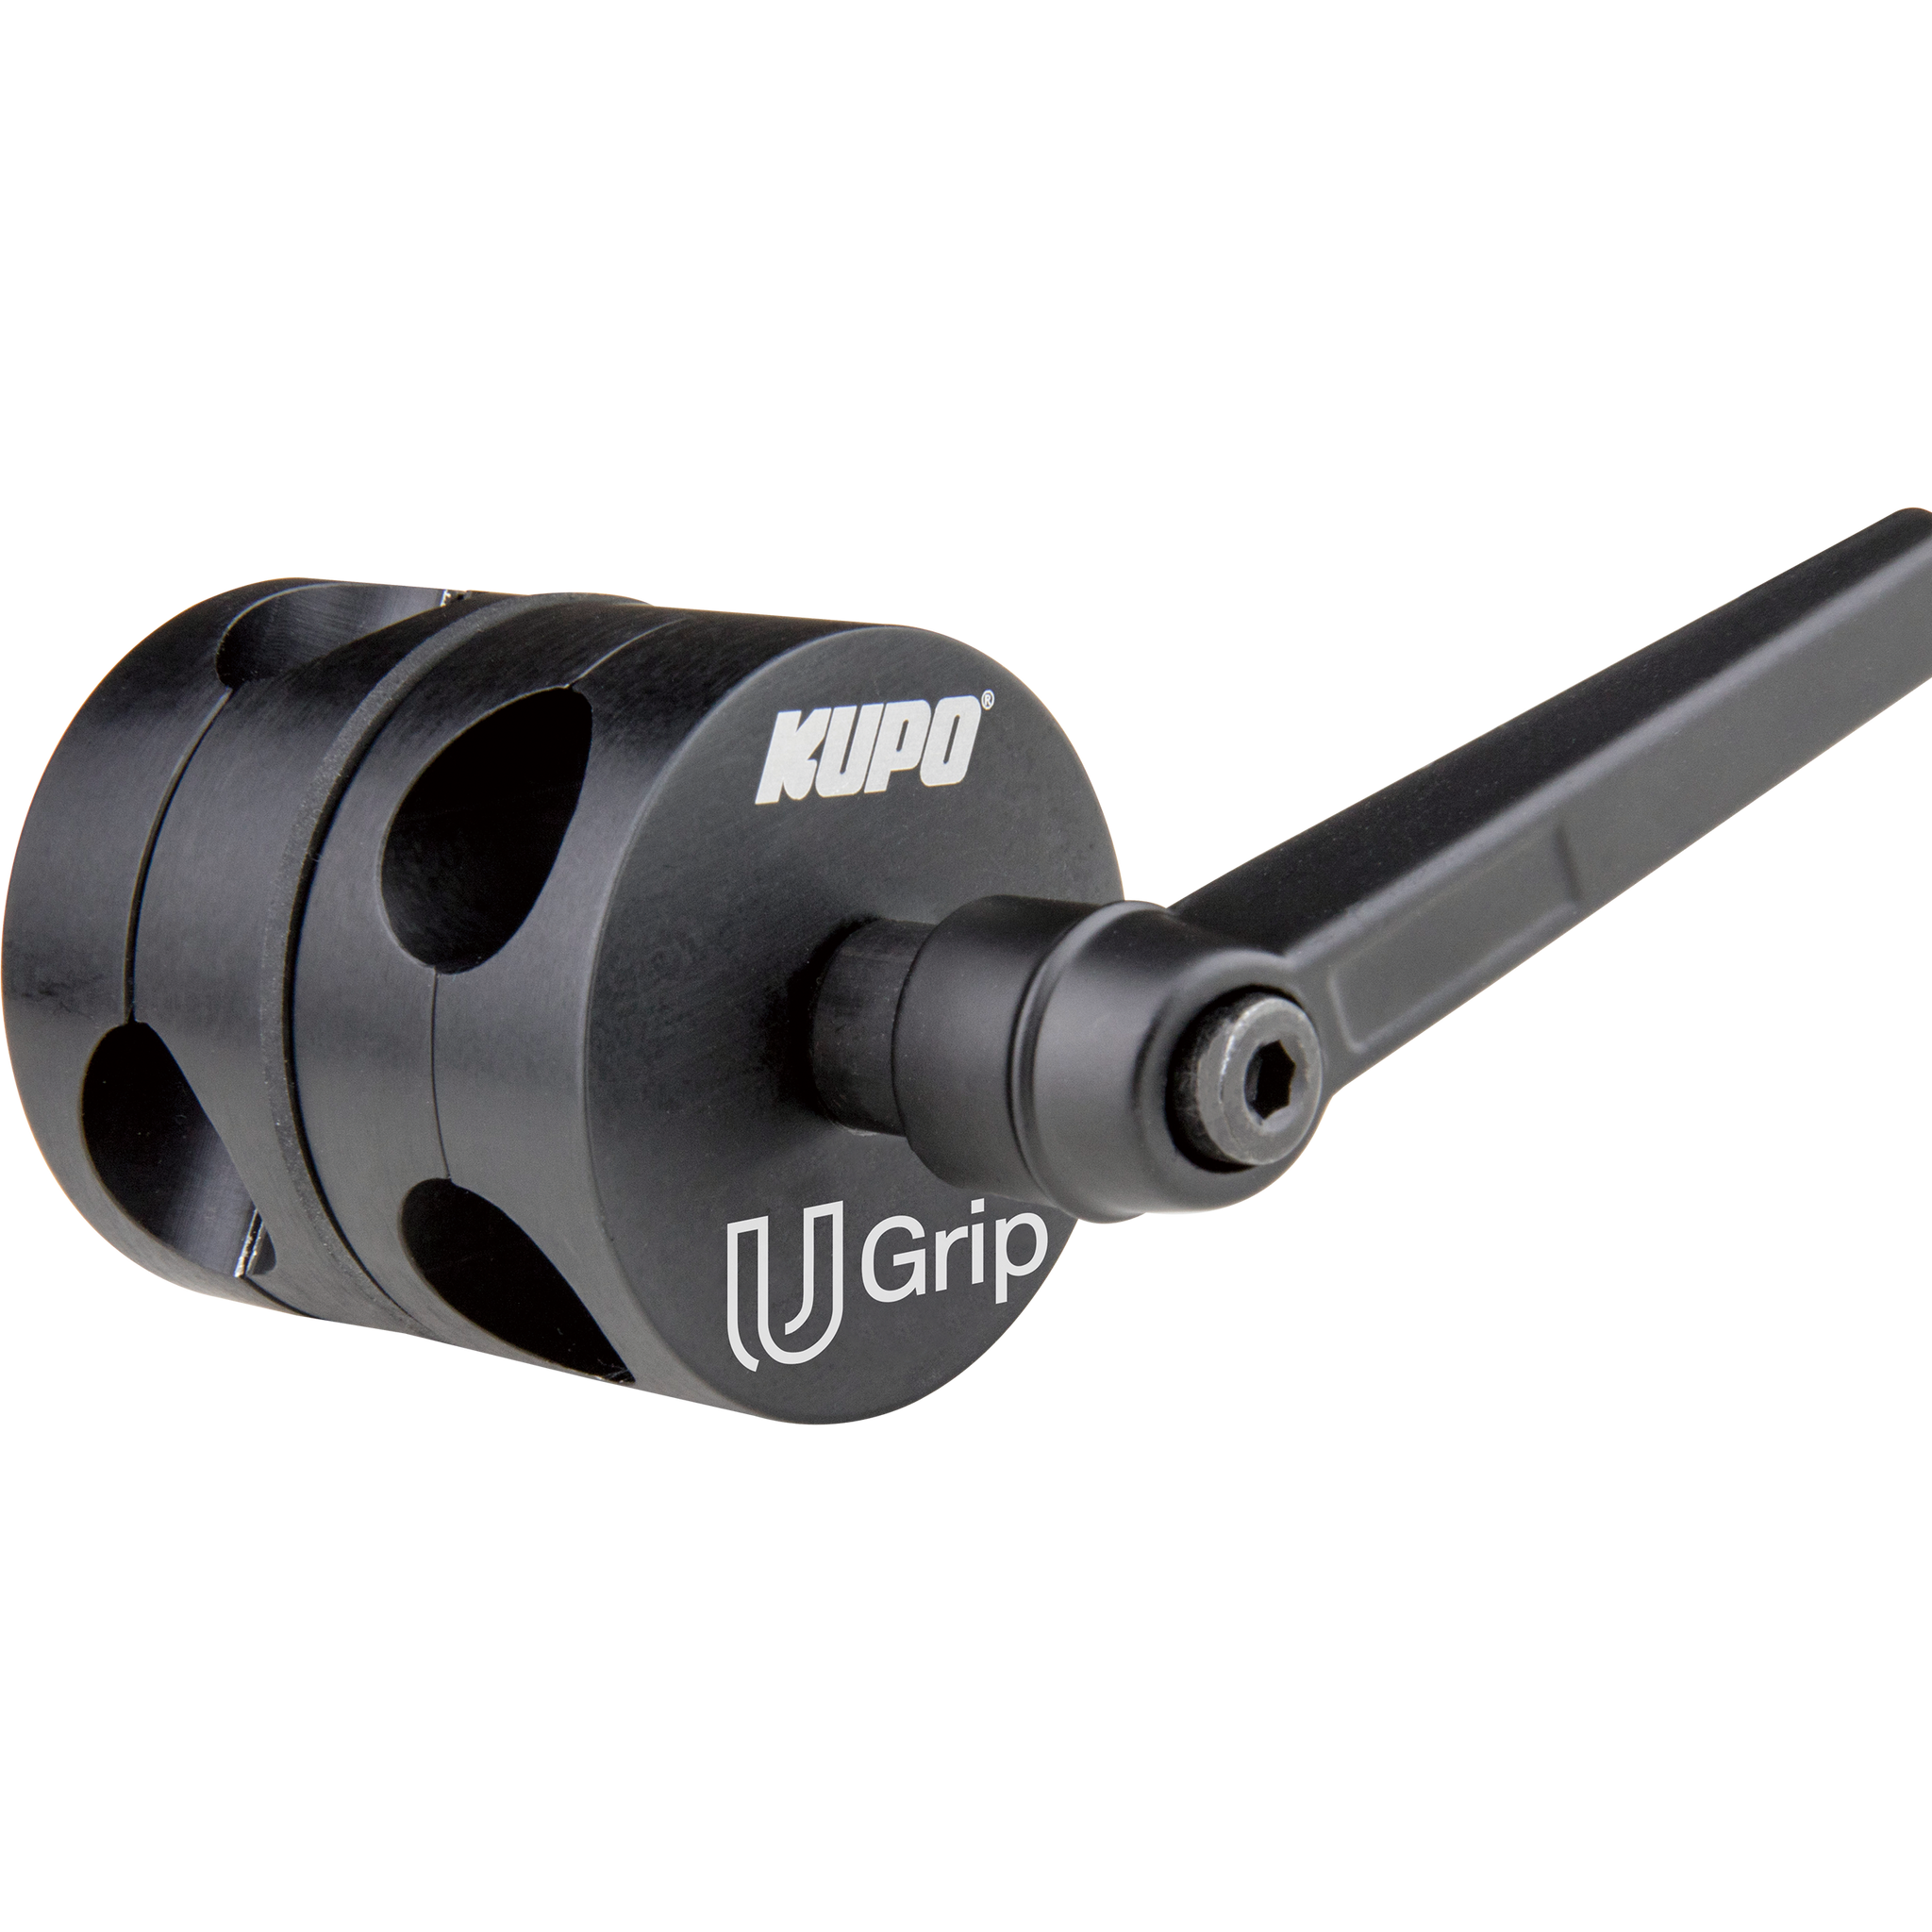 Kupo KG102012 U-Grip Gag Grip Head (1.9'')